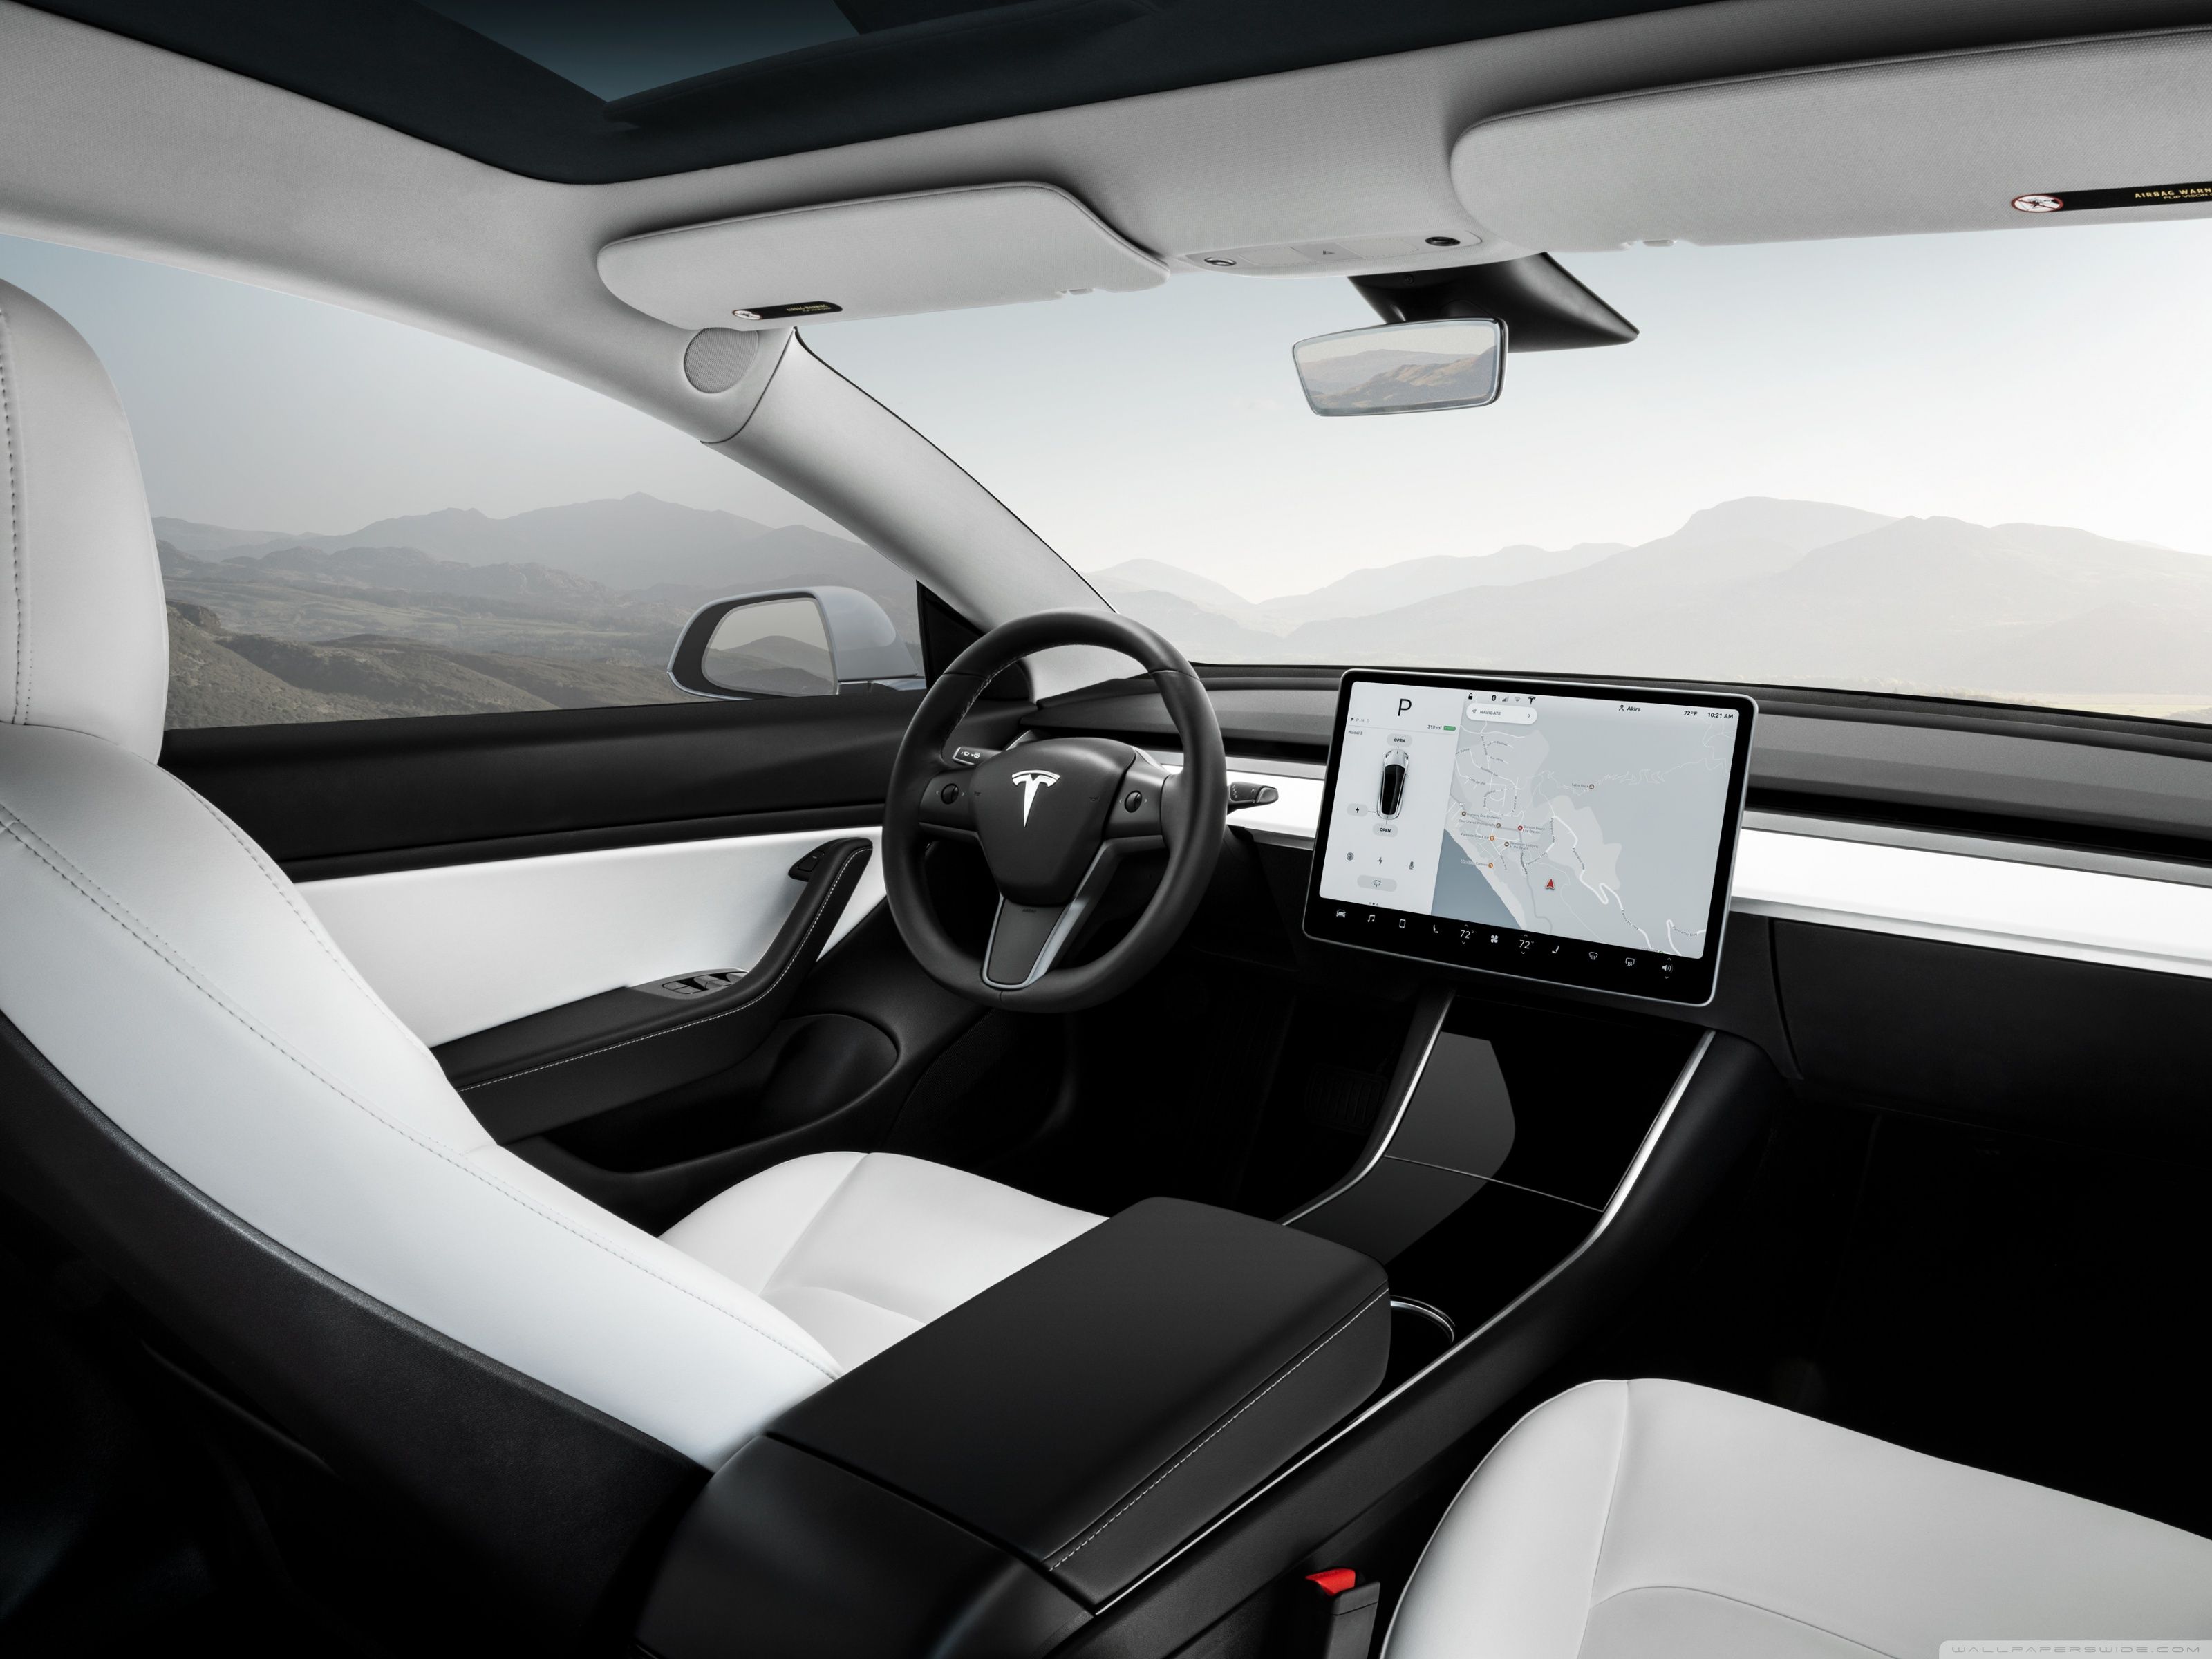 Tesla Model 3 Electric Car Interior Ultra HD Desktop Background Wallpaper for 4K UHD TV, Widescreen & UltraWide Desktop & Laptop, Multi Display, Dual Monitor, Tablet